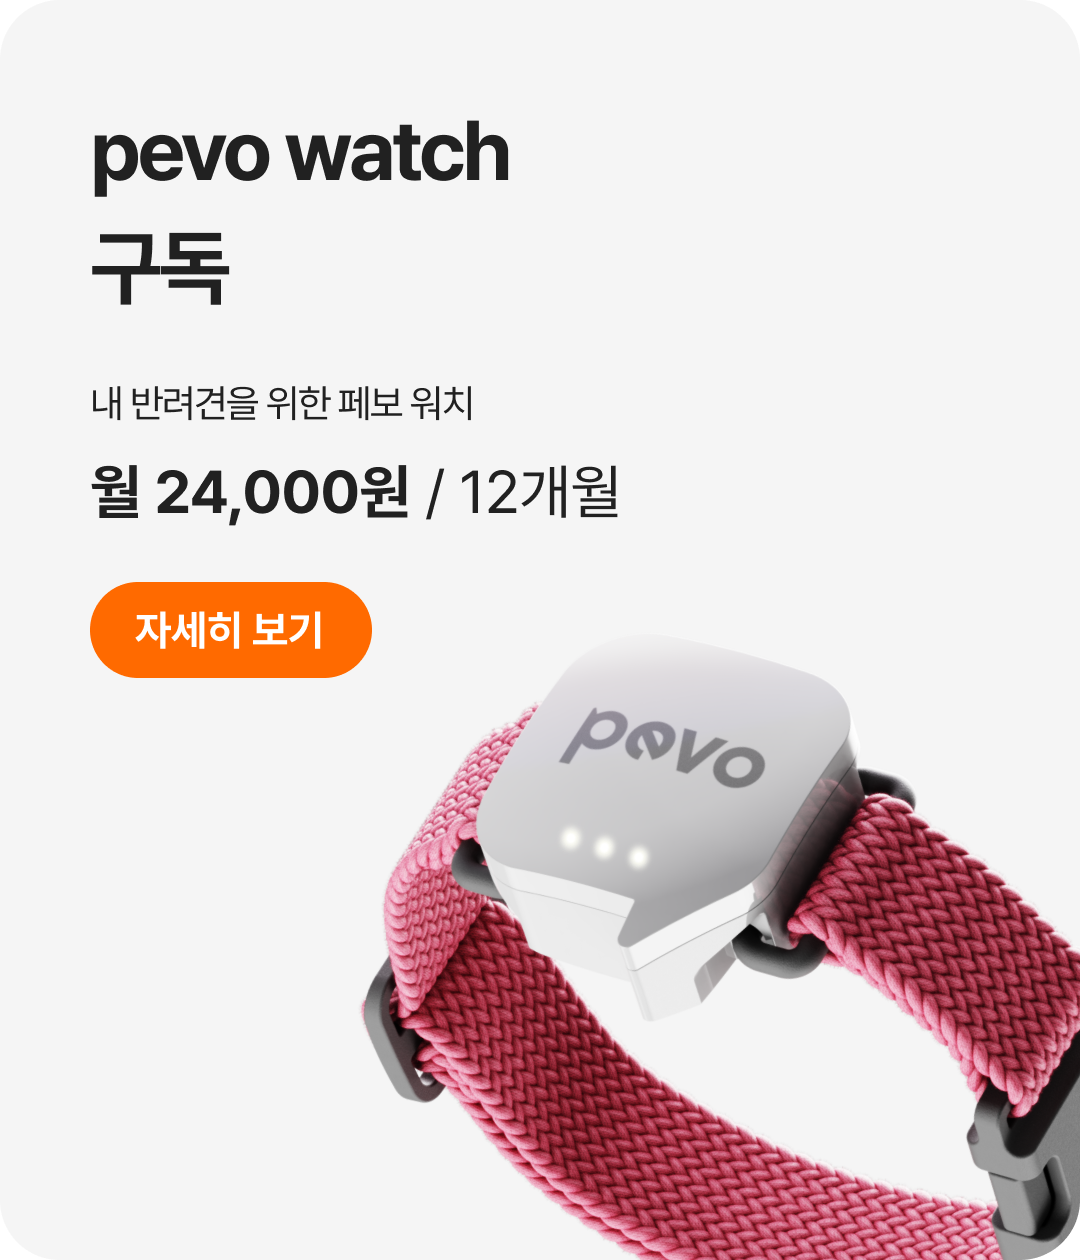 pevo app 나와 아이를 위한 밀착 연결 플랫폼, pevo watch로 수집된 건강데이터를 app으로 실시간 확인